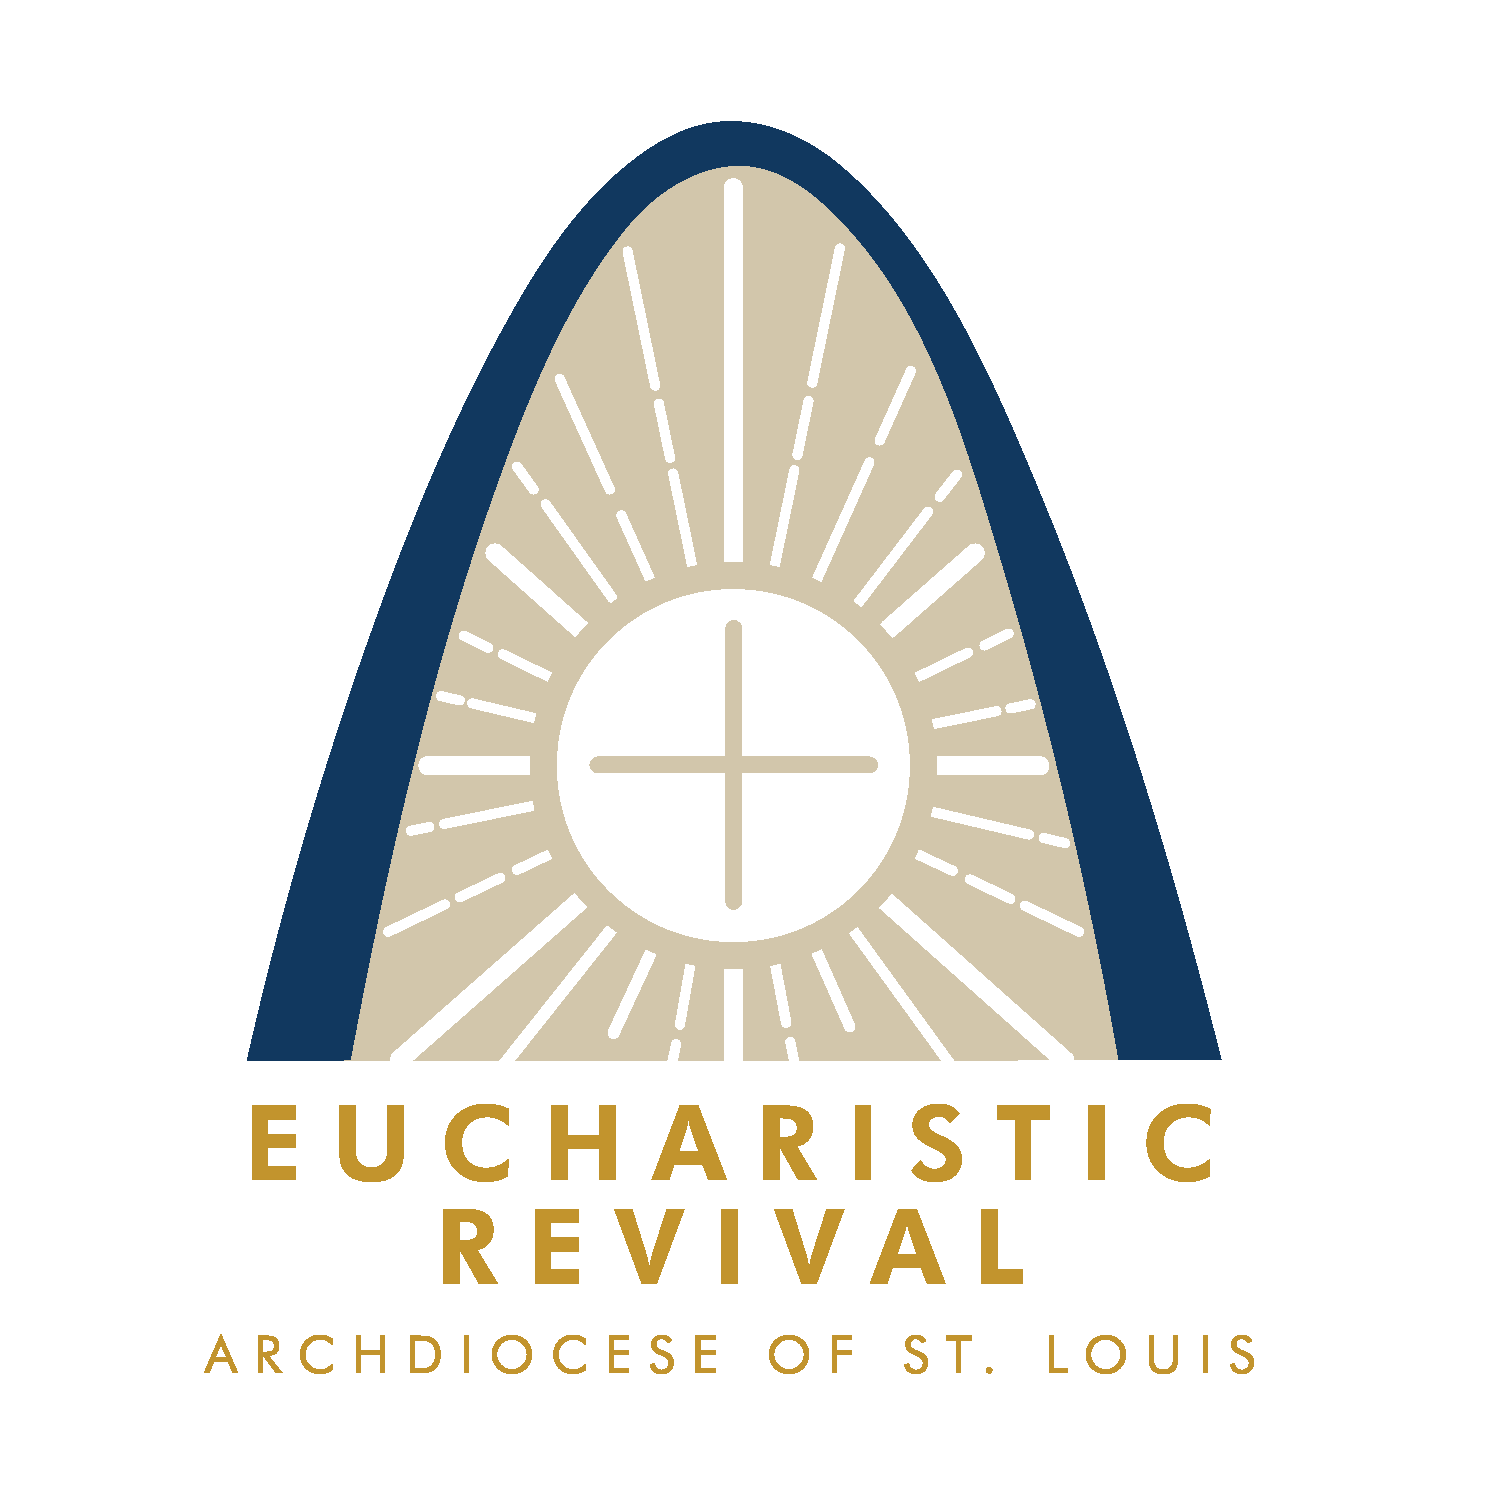 EucharisticRevival_logo_vertical